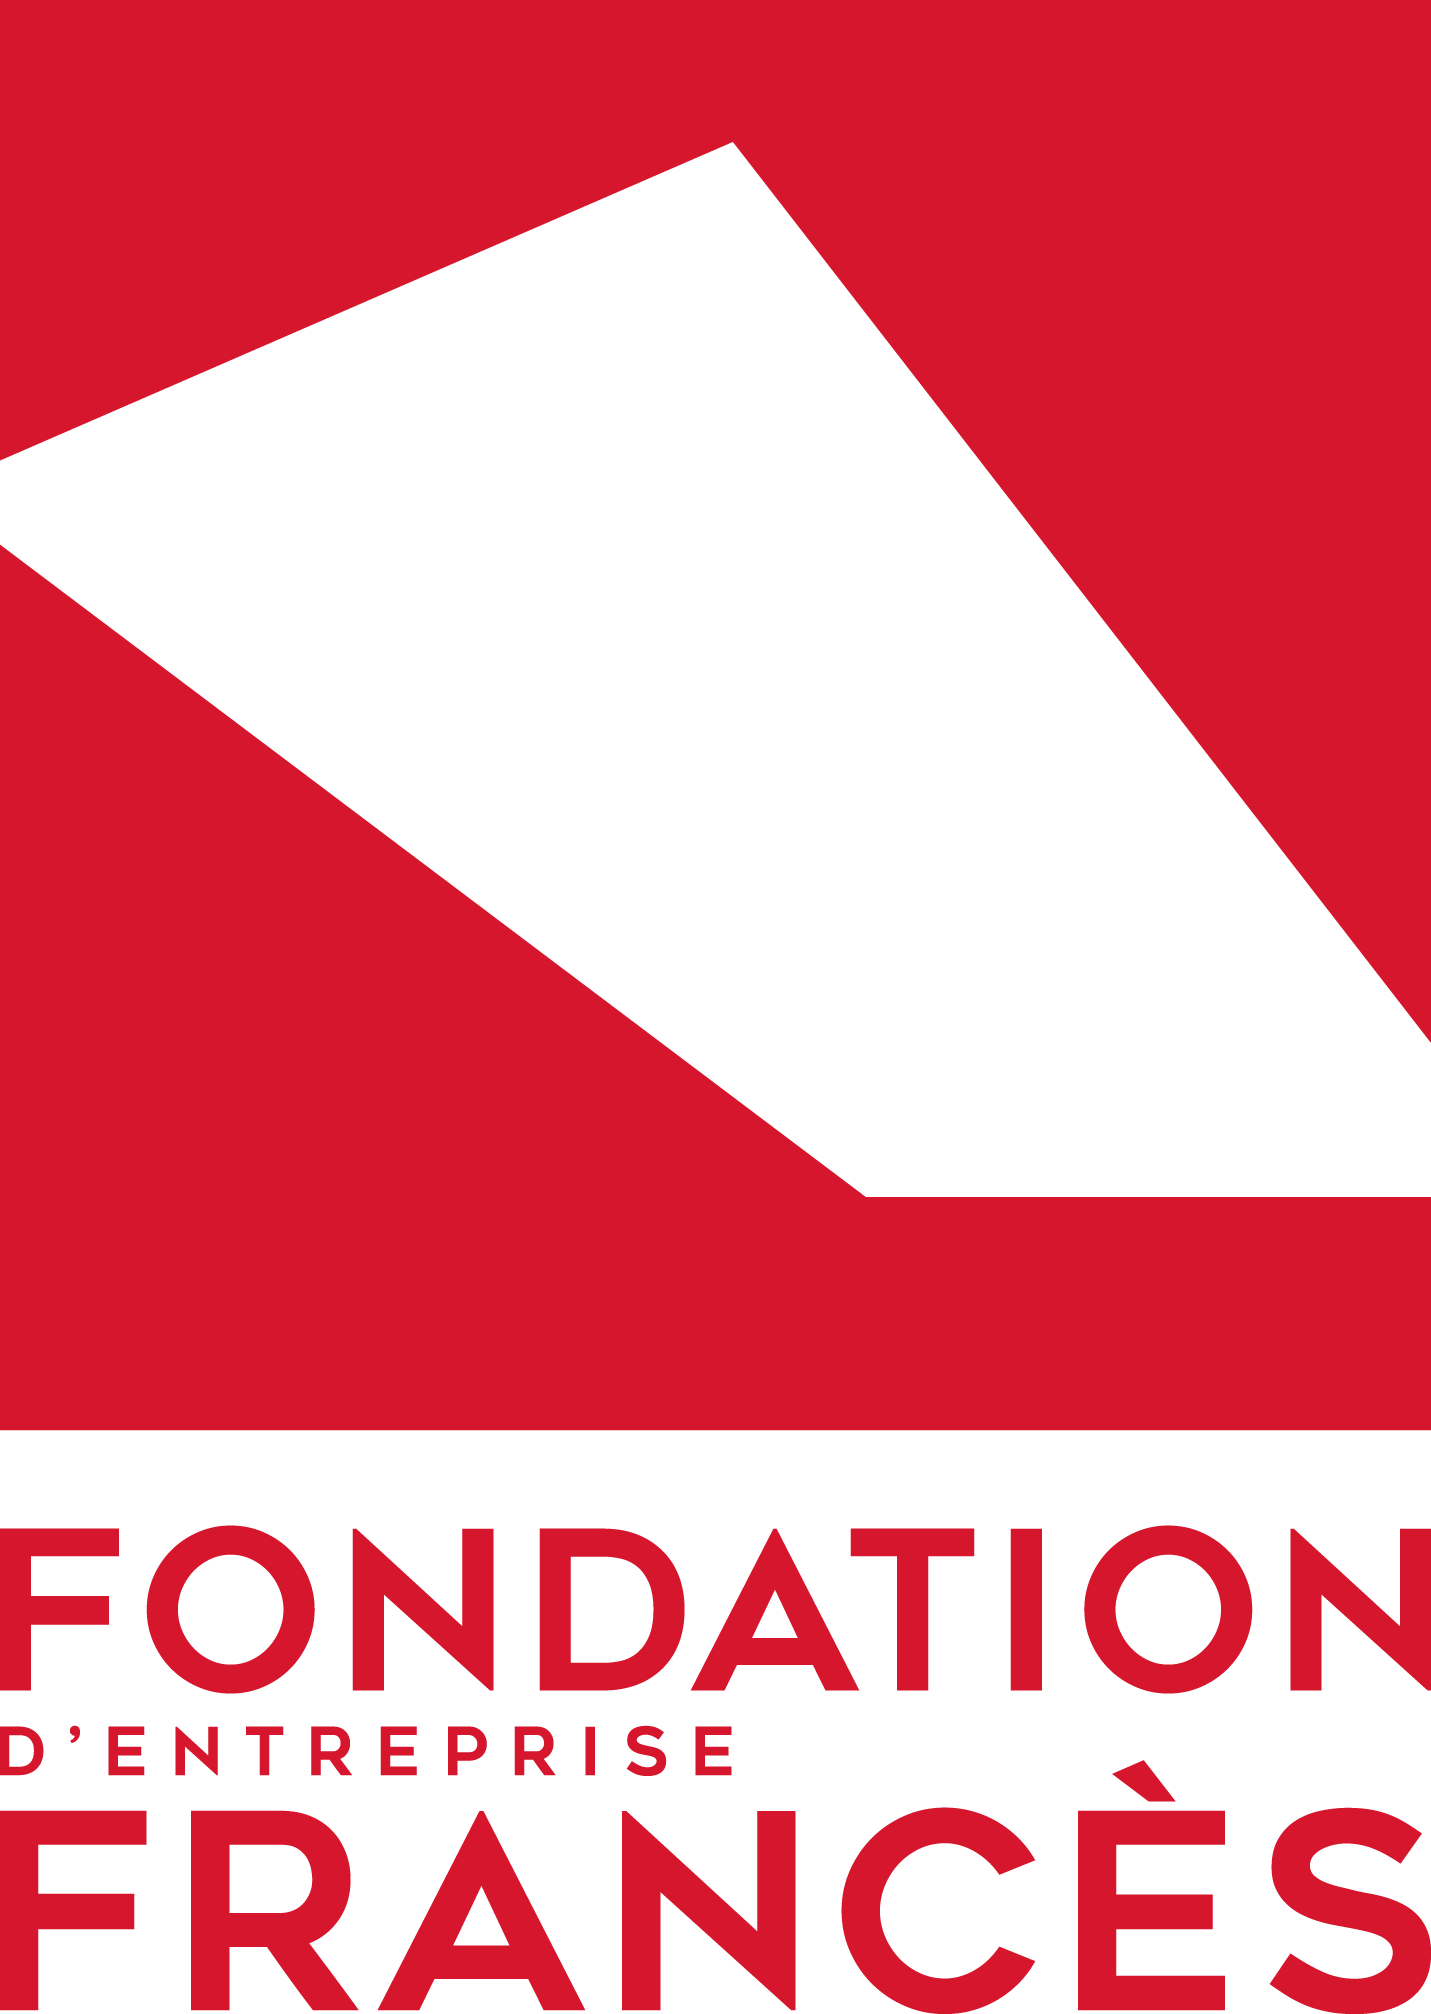 Fondation Francès